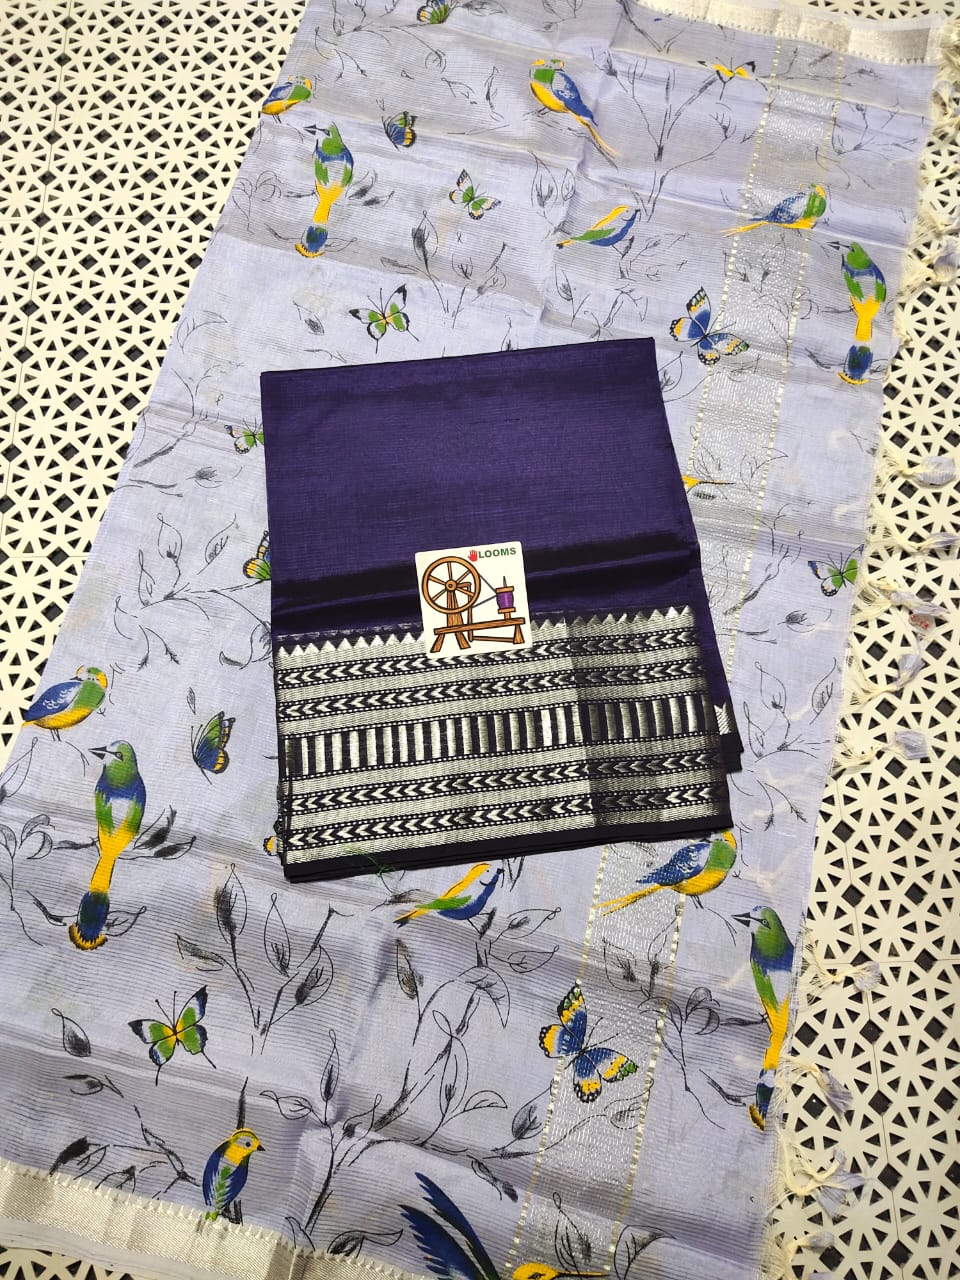 Top Cotton Dress Material Manufacturers in Machilipatnam - कॉटन ड्रेस  मटेरियल मनुफक्चरर्स, मचिलीपट्नम - Justdial